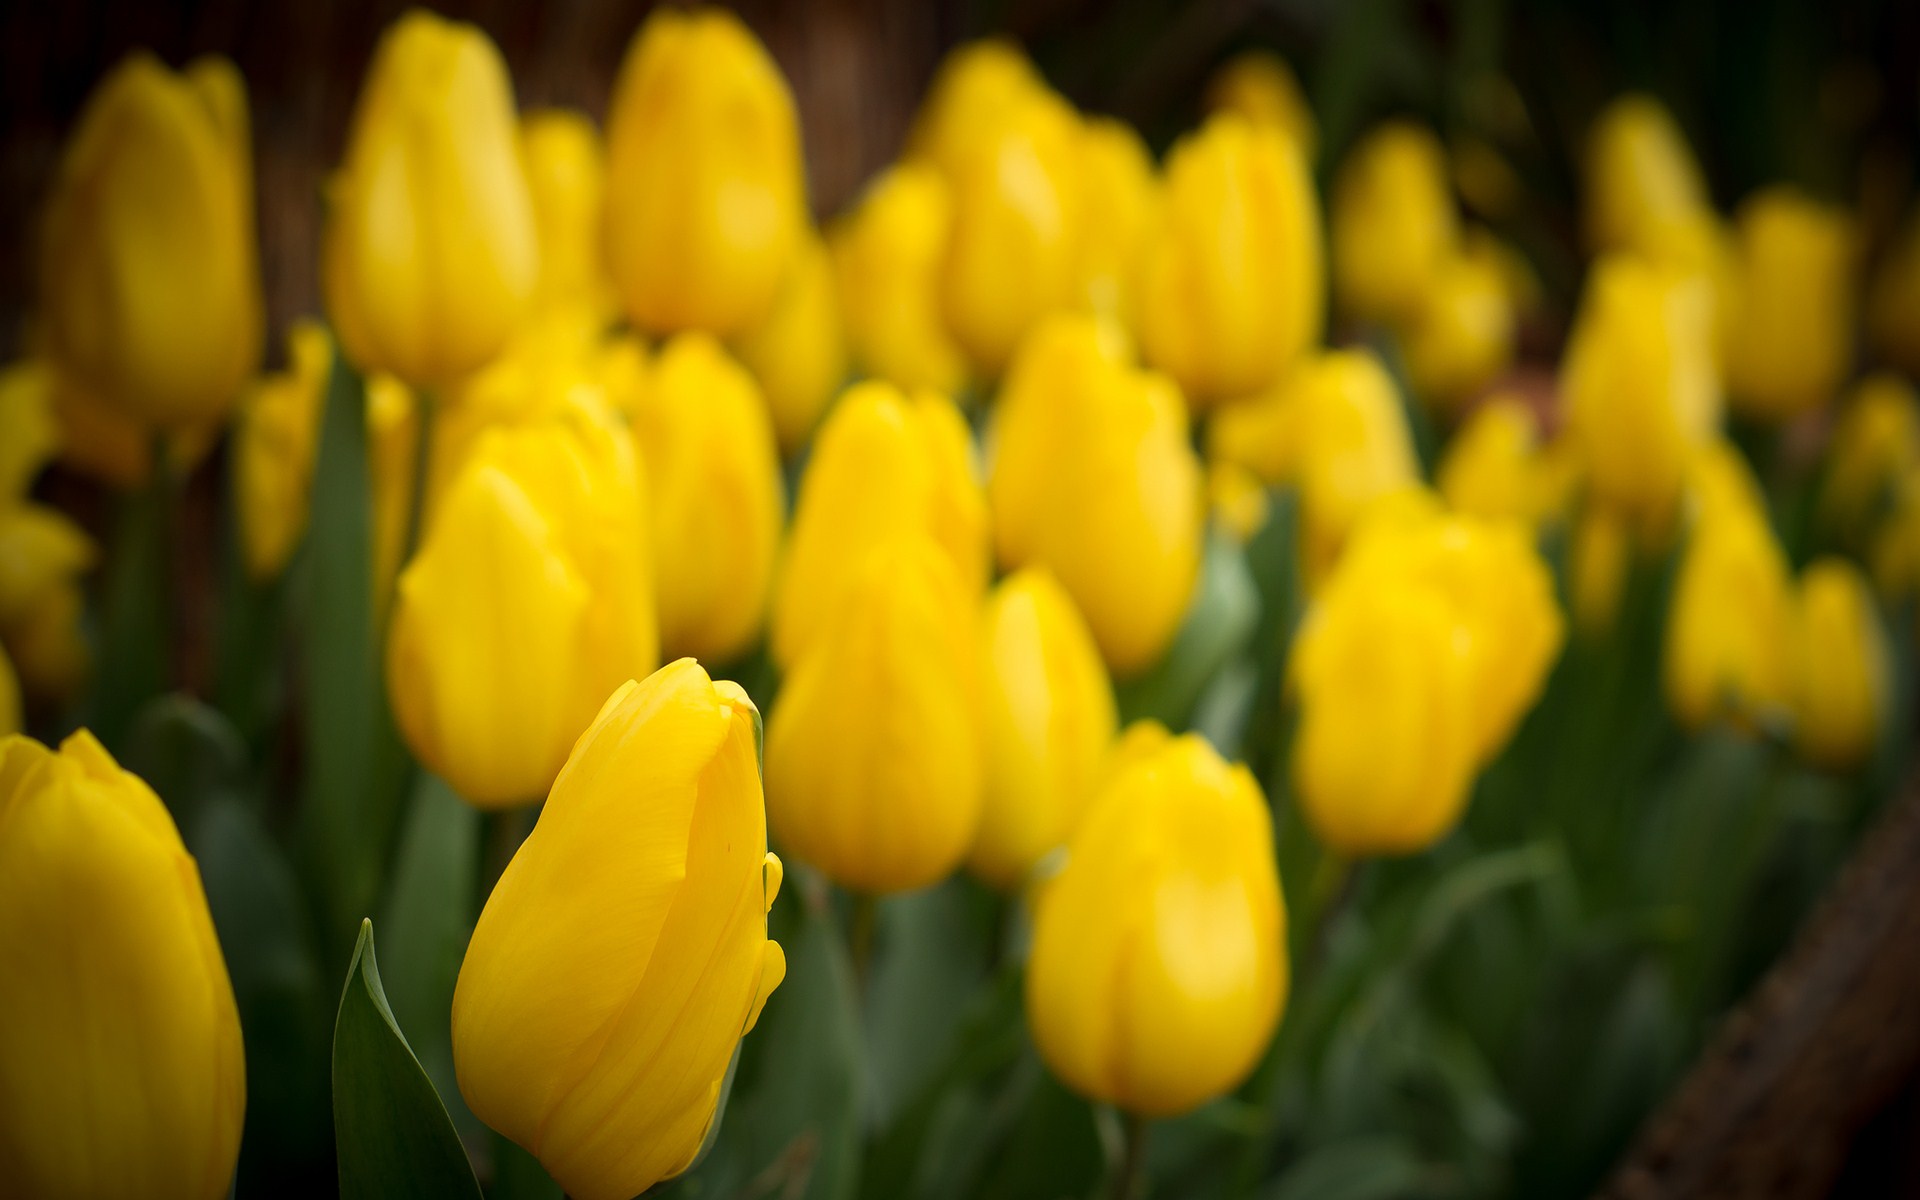 Yellow Flower Picture | Free Photograph | Photos Public Domain